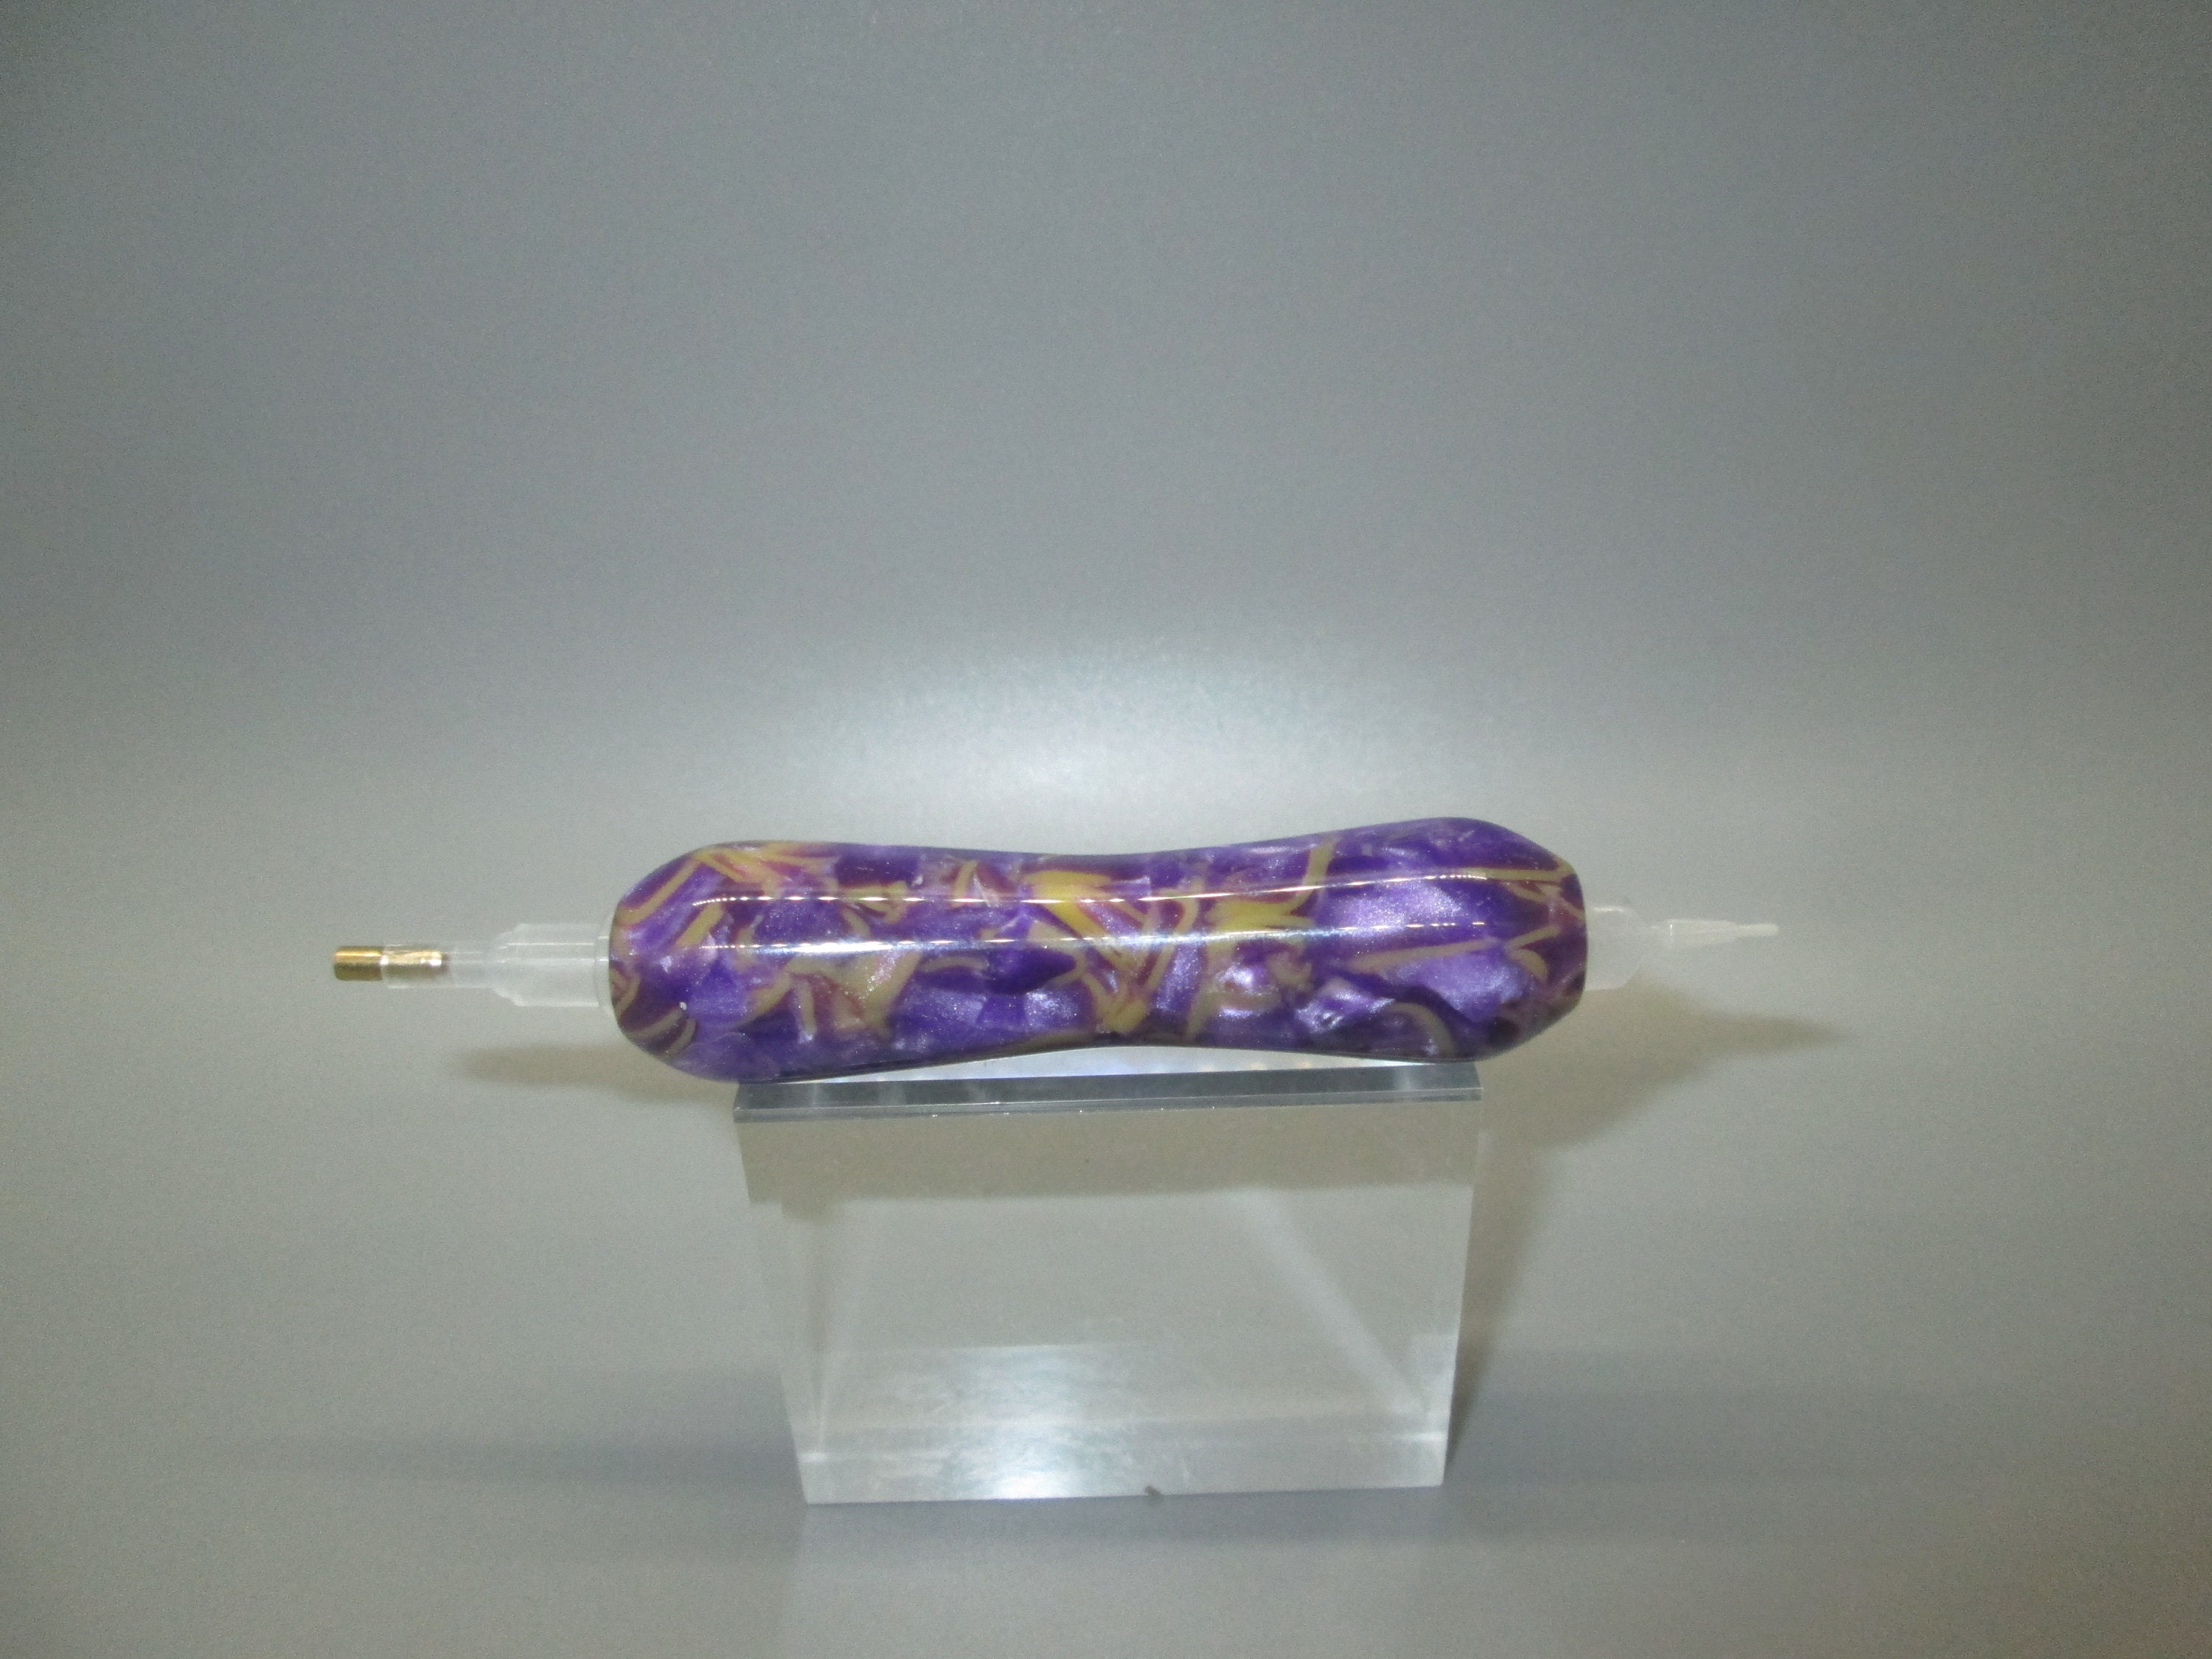 Mini Diamond Painting Pen, Purple, Pink, Gray, Light Teal, Sparkle, Stylus  Pen, Handturned, Acrylic. 